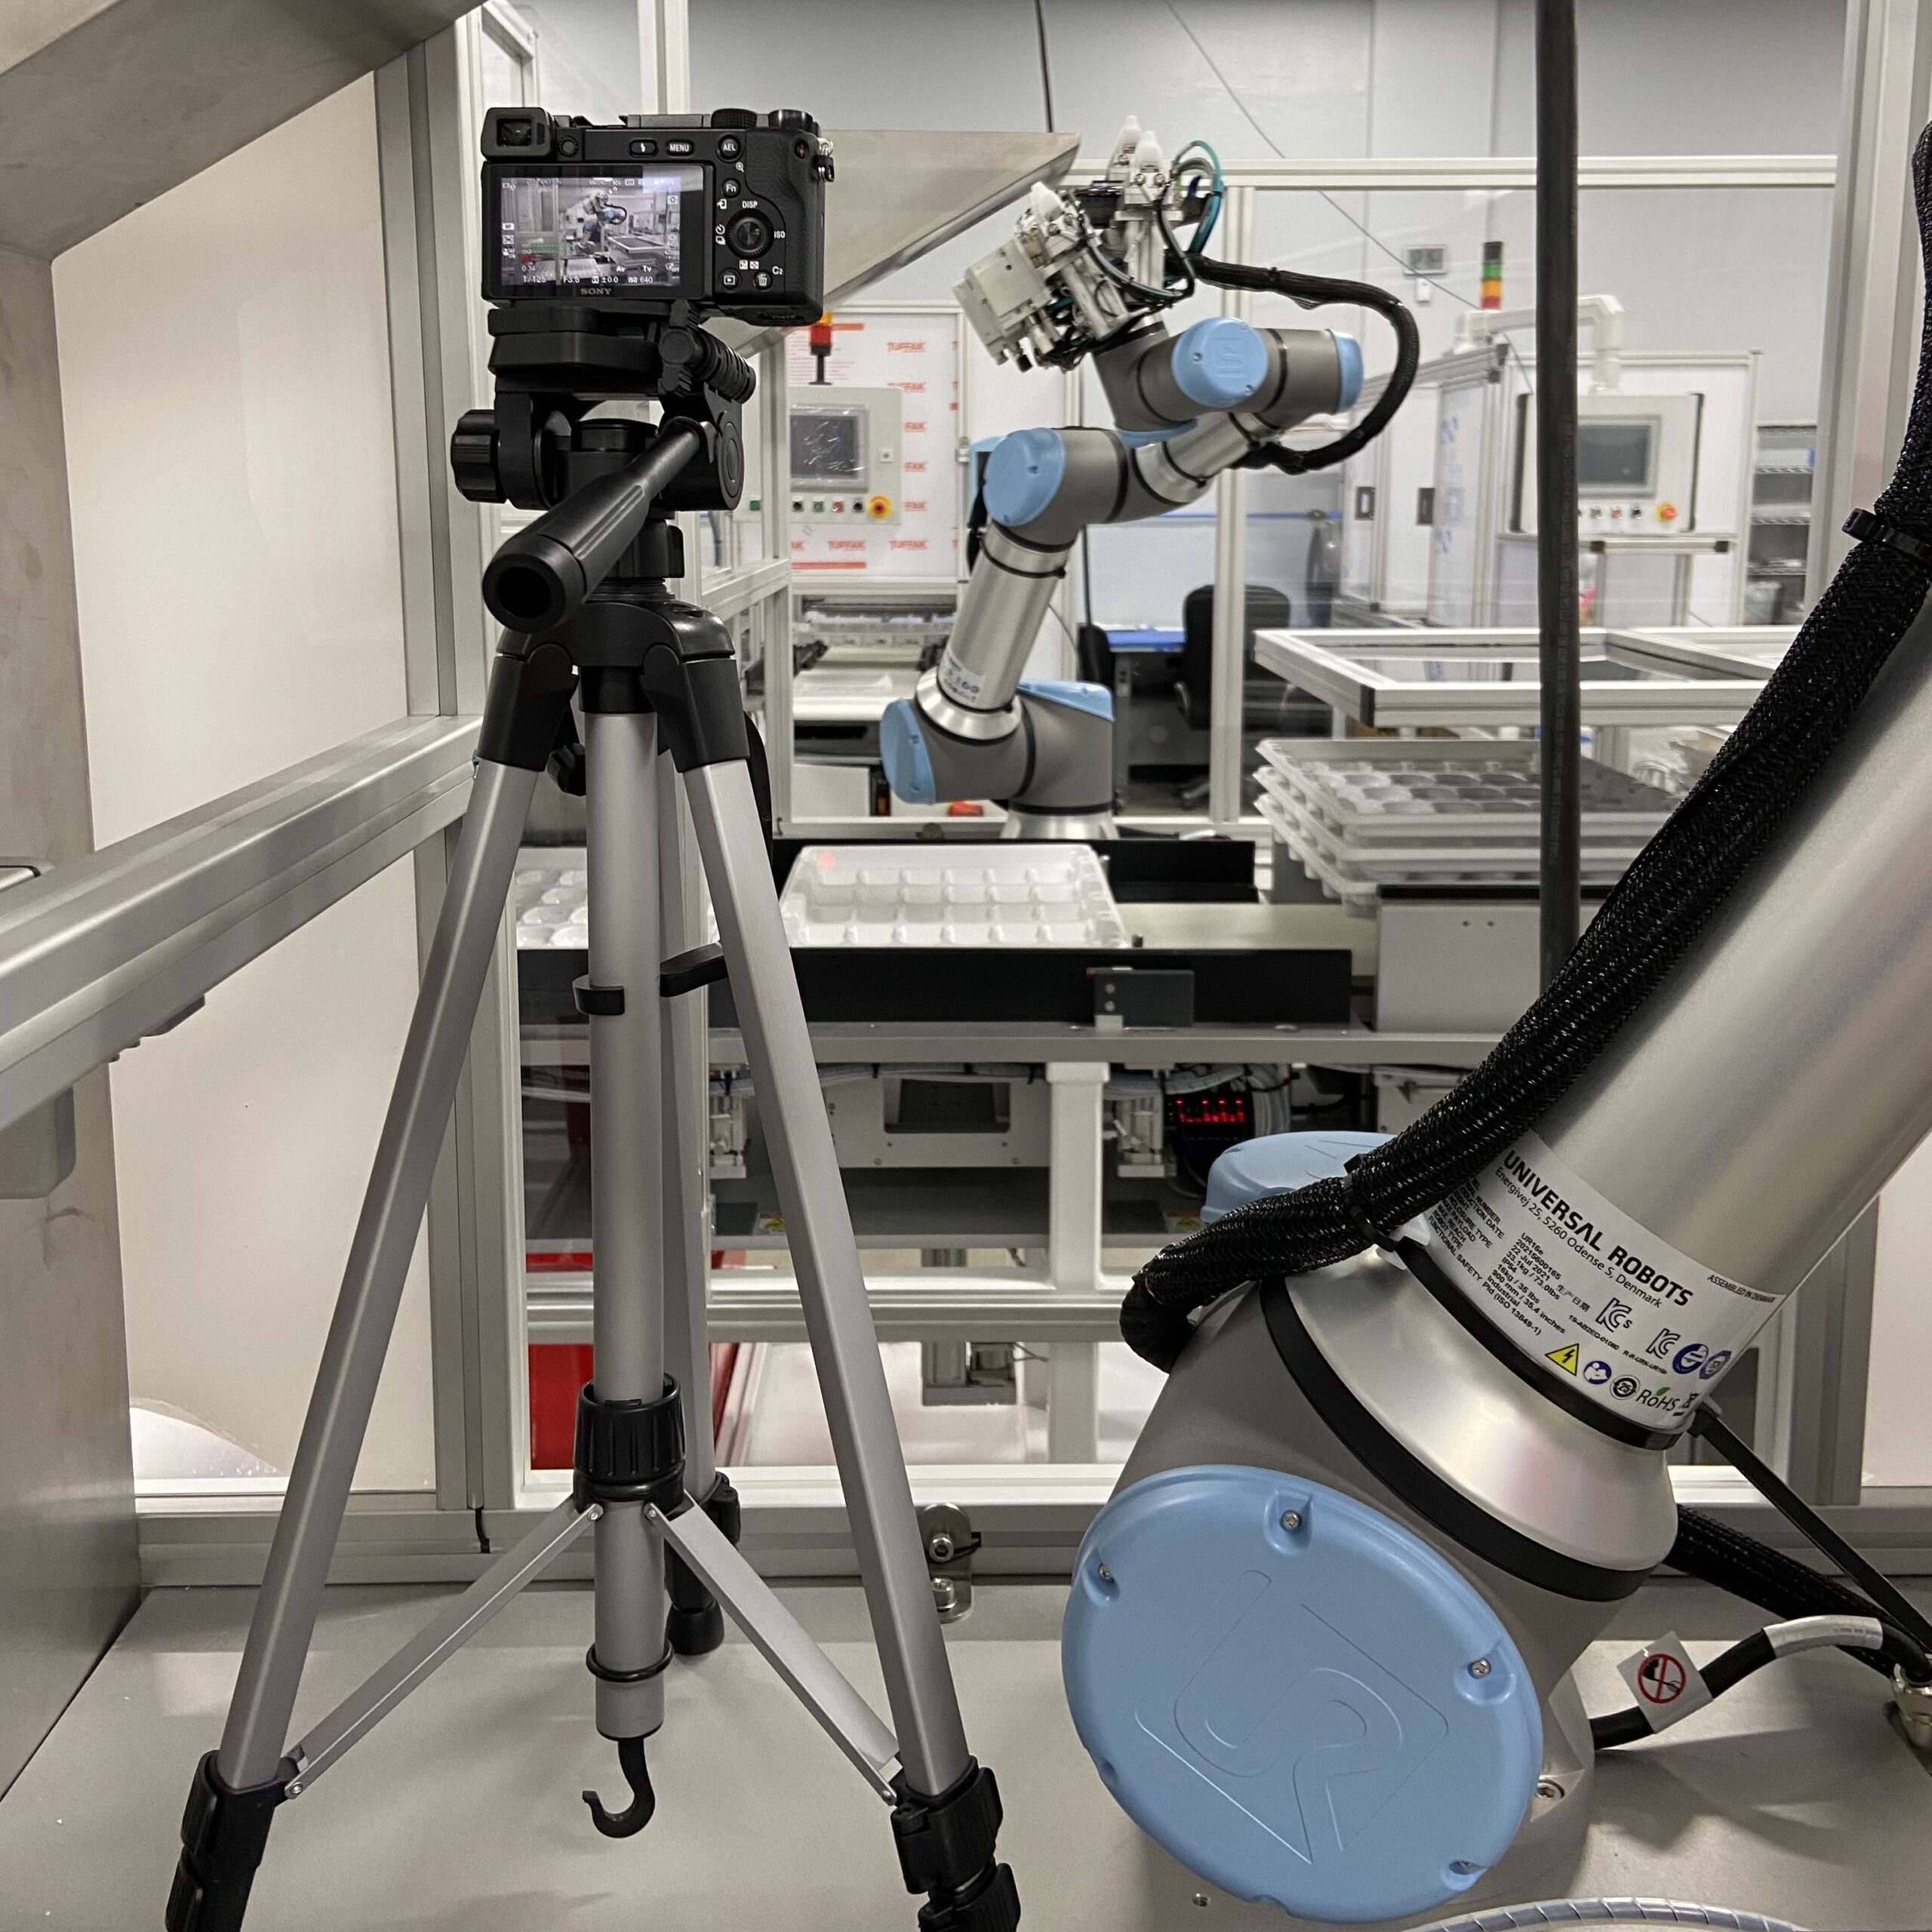 Camera on tripod filming collaborative robot arm